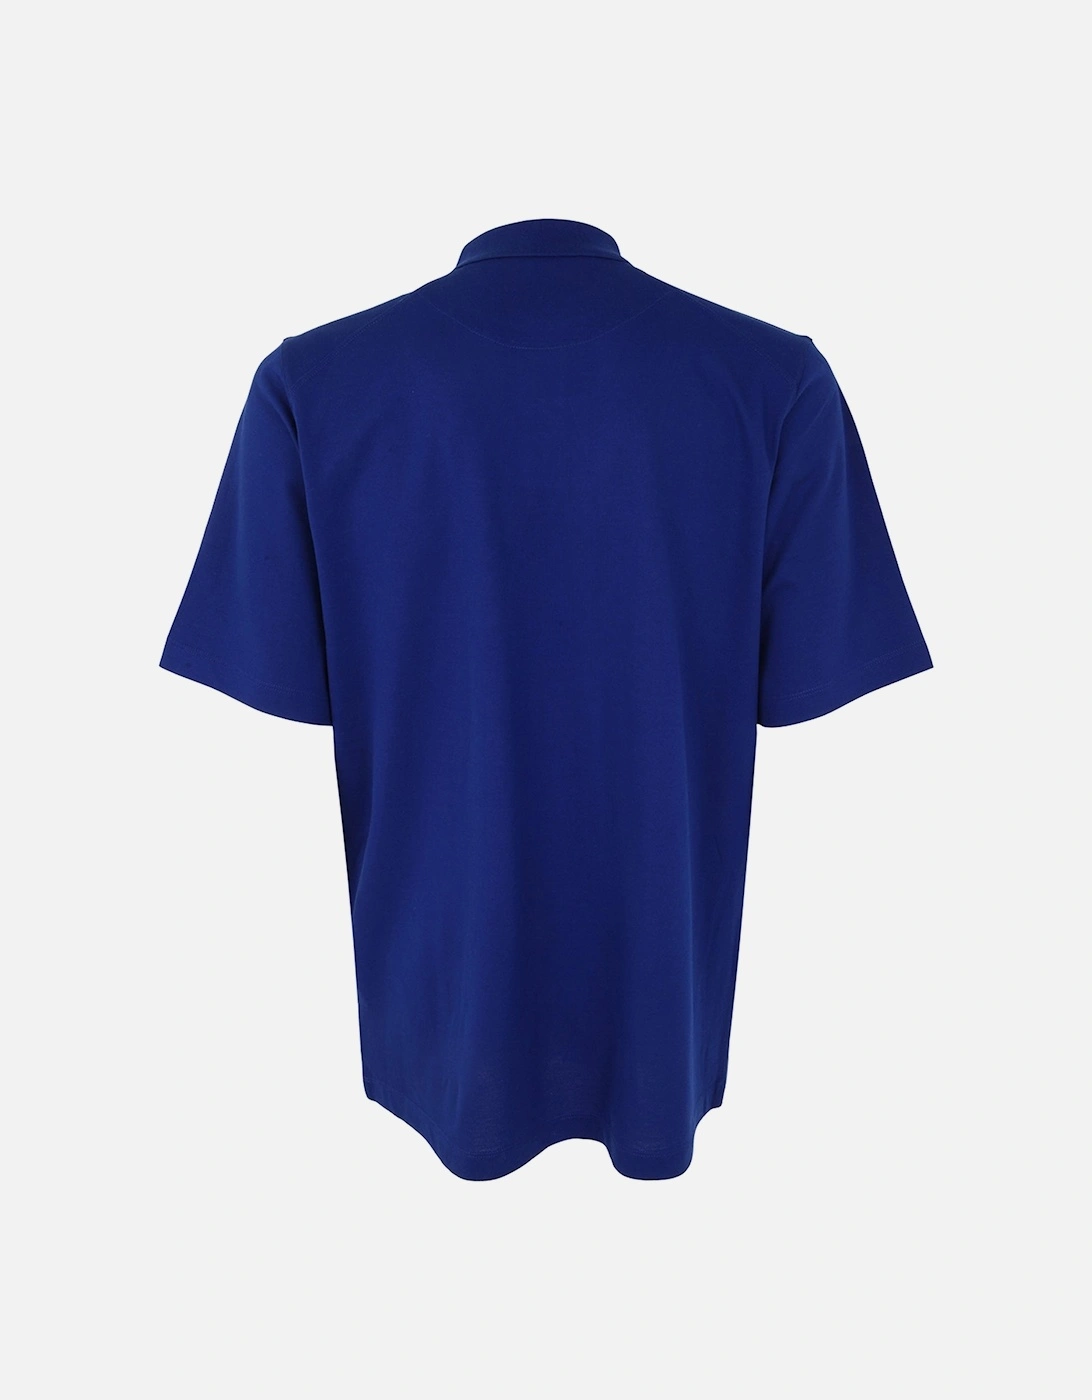 Y-3 Unisex Short Sleeve Polo Shirt Blue